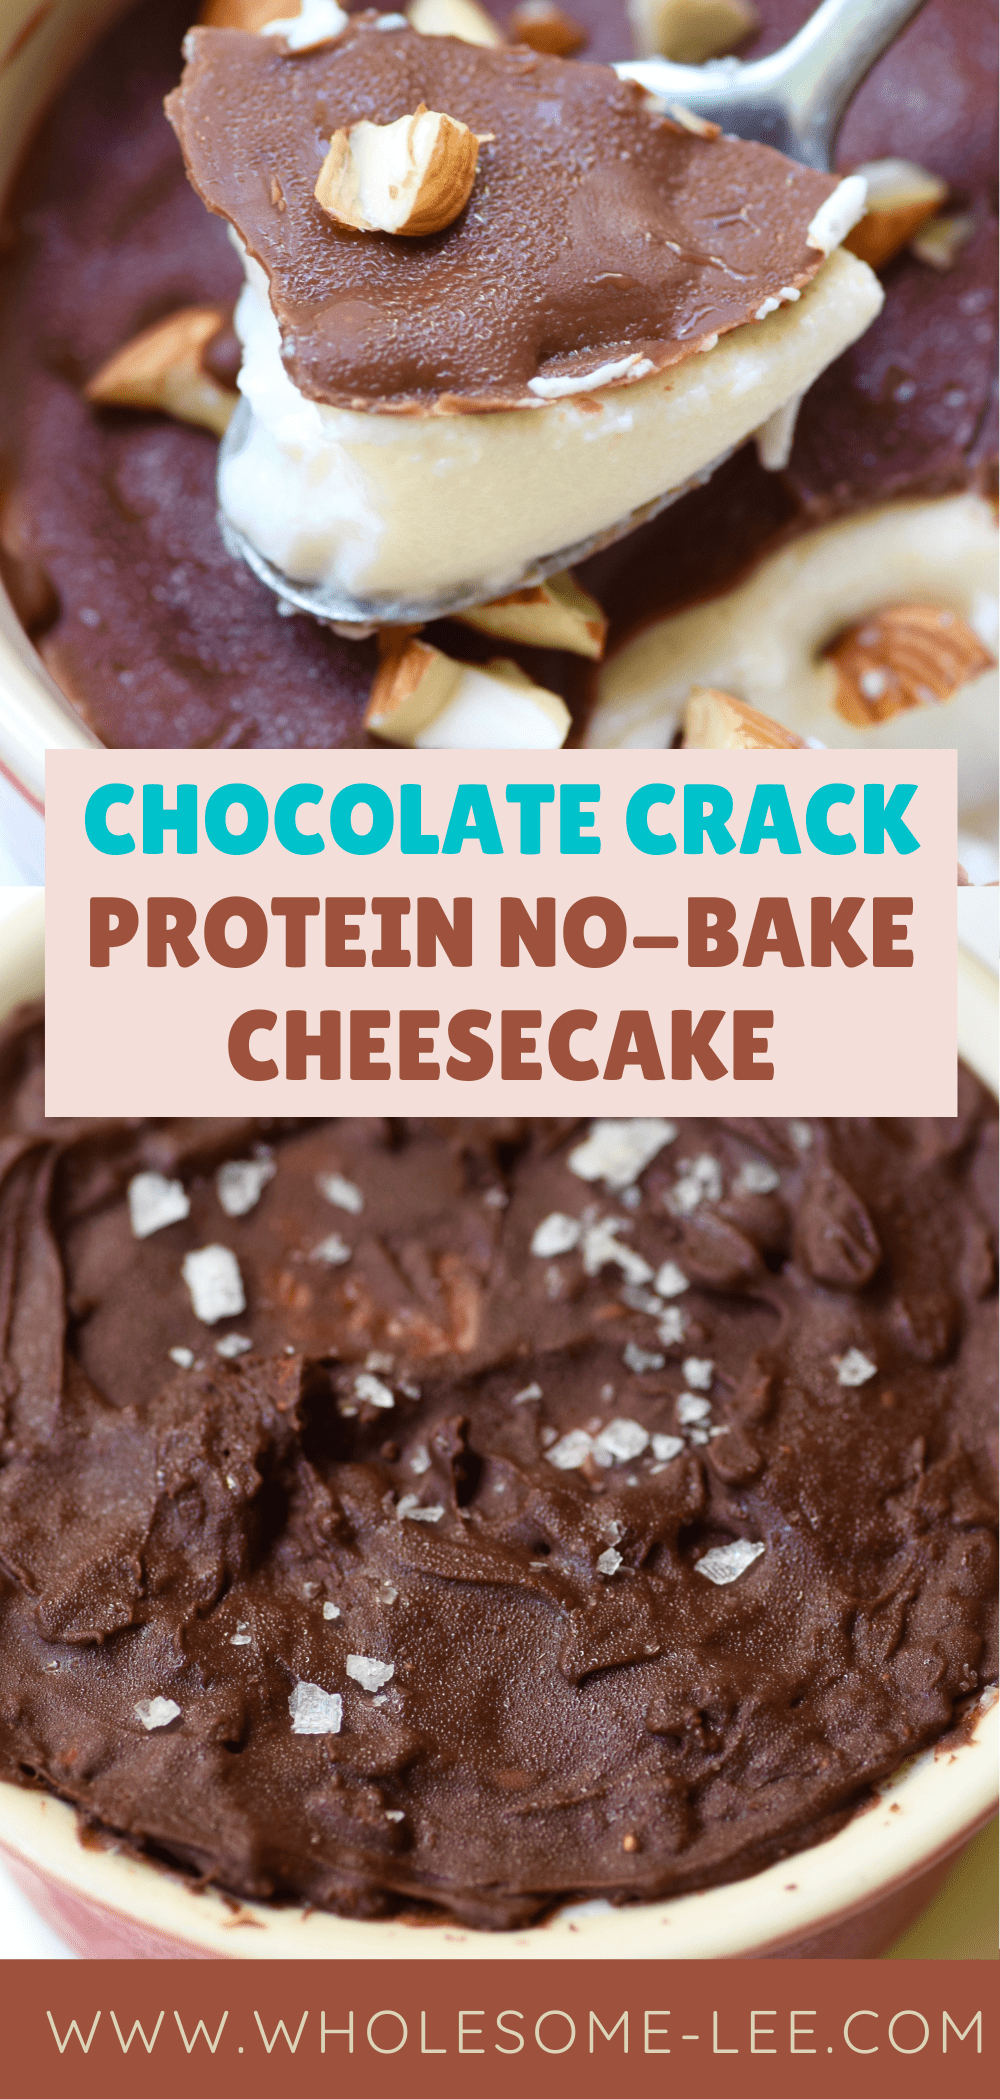 Chocolate crack protein no-bake cheesecake